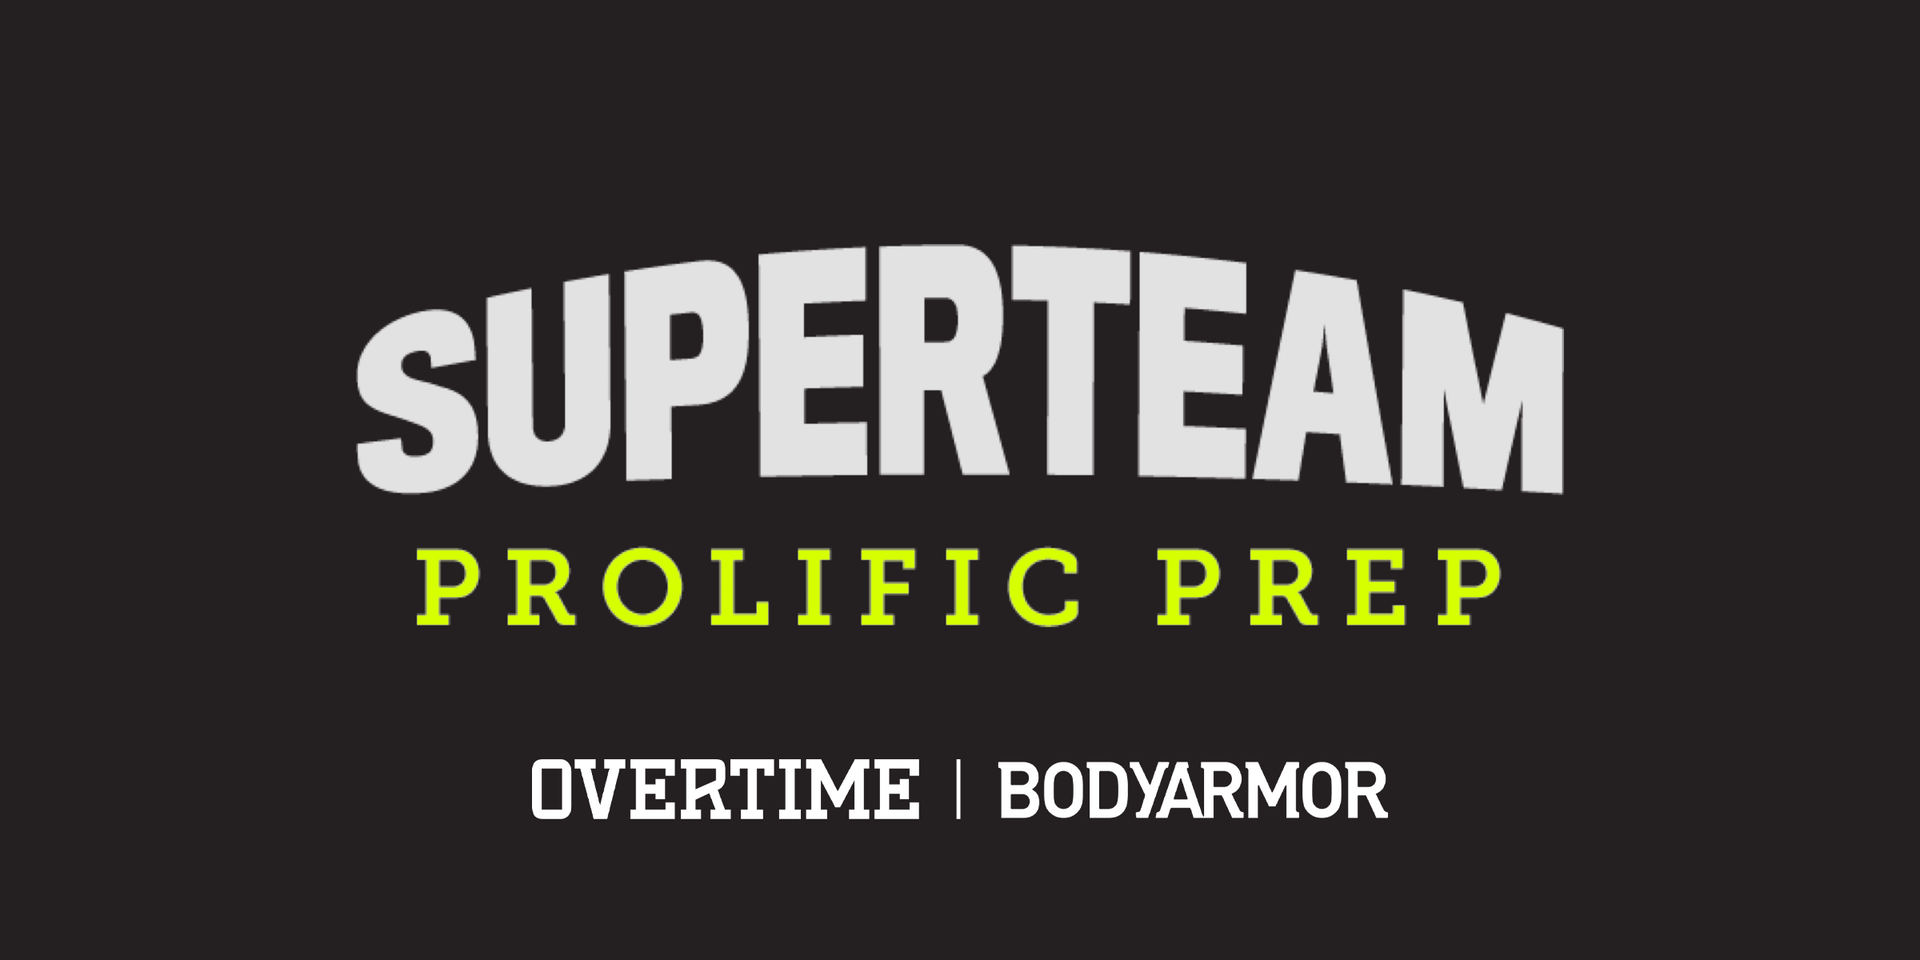 Superteam: Prolific Prep